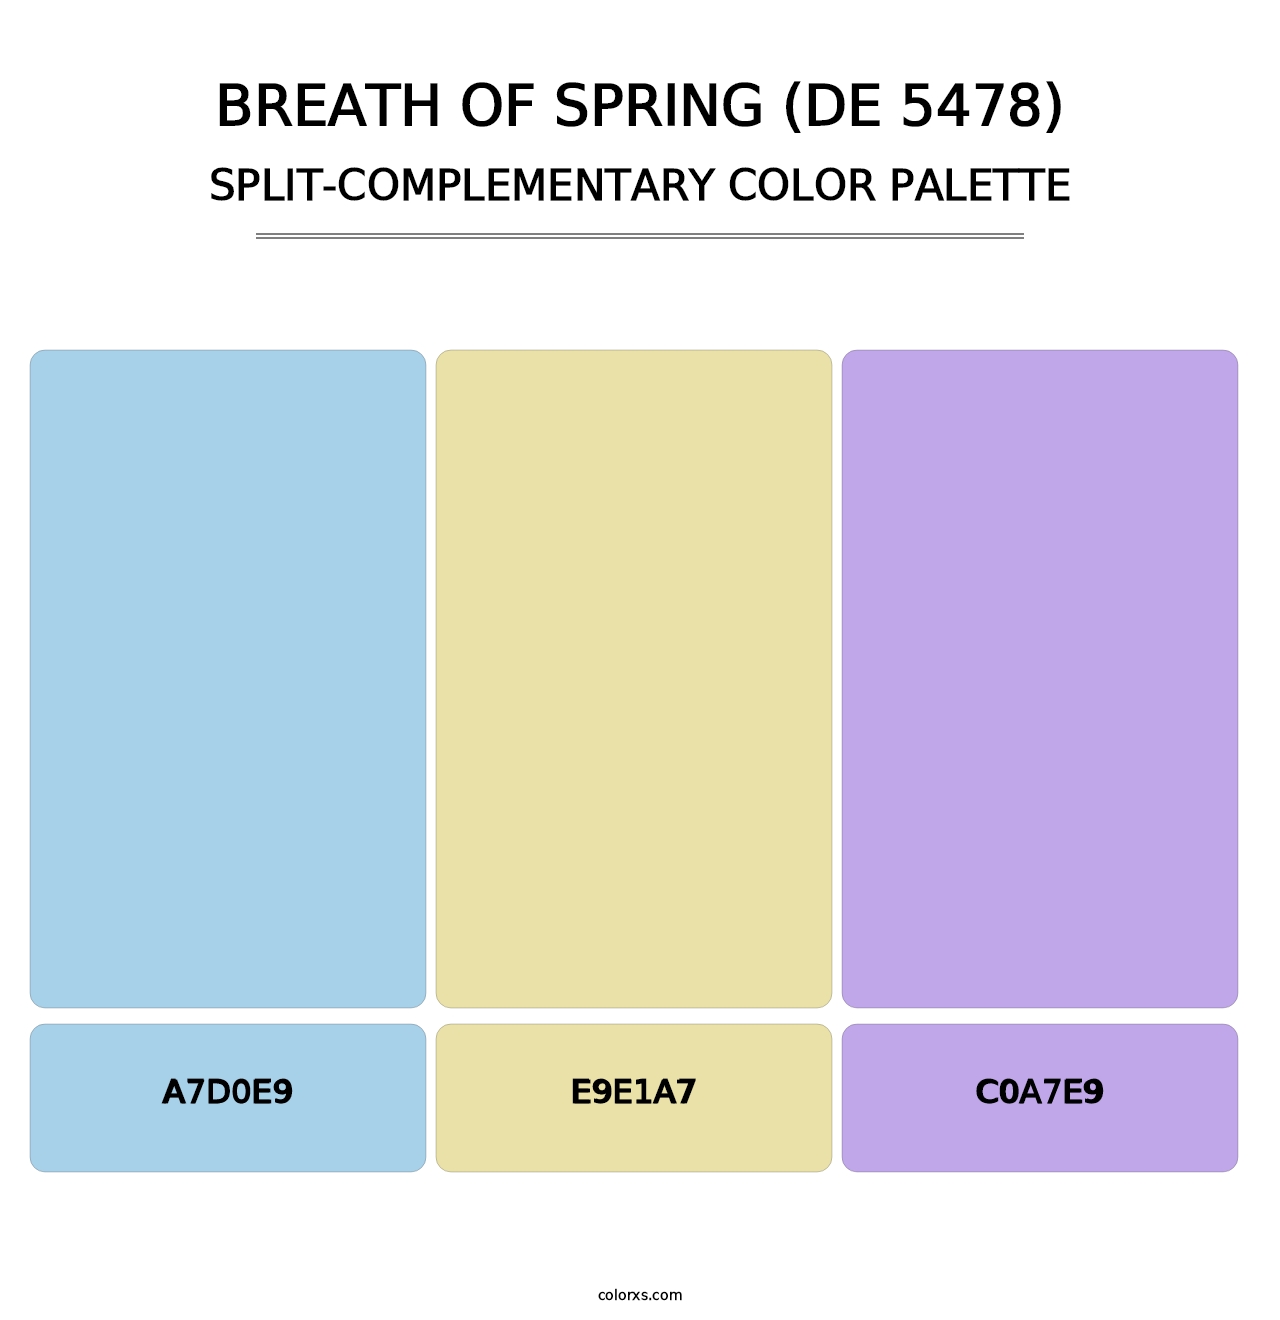 Breath of Spring (DE 5478) - Split-Complementary Color Palette